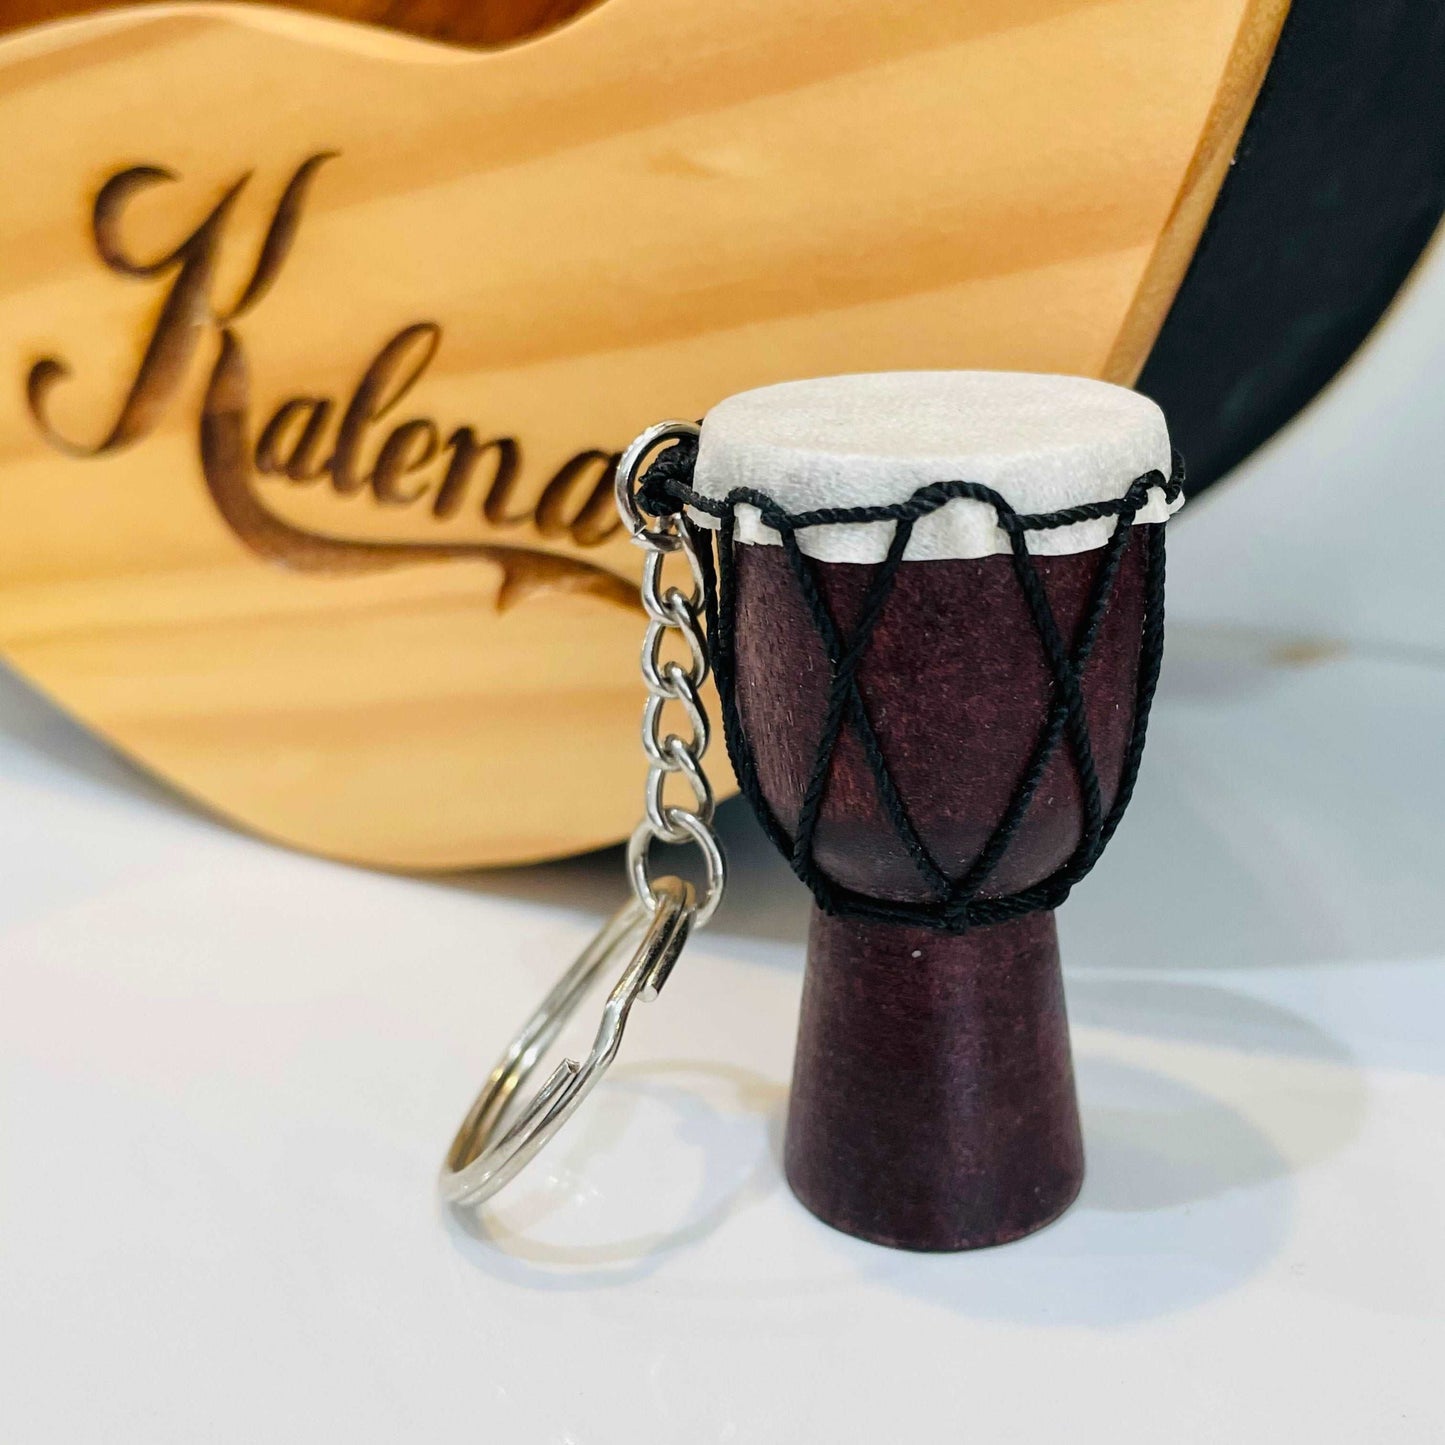 drum keychain - Kalena